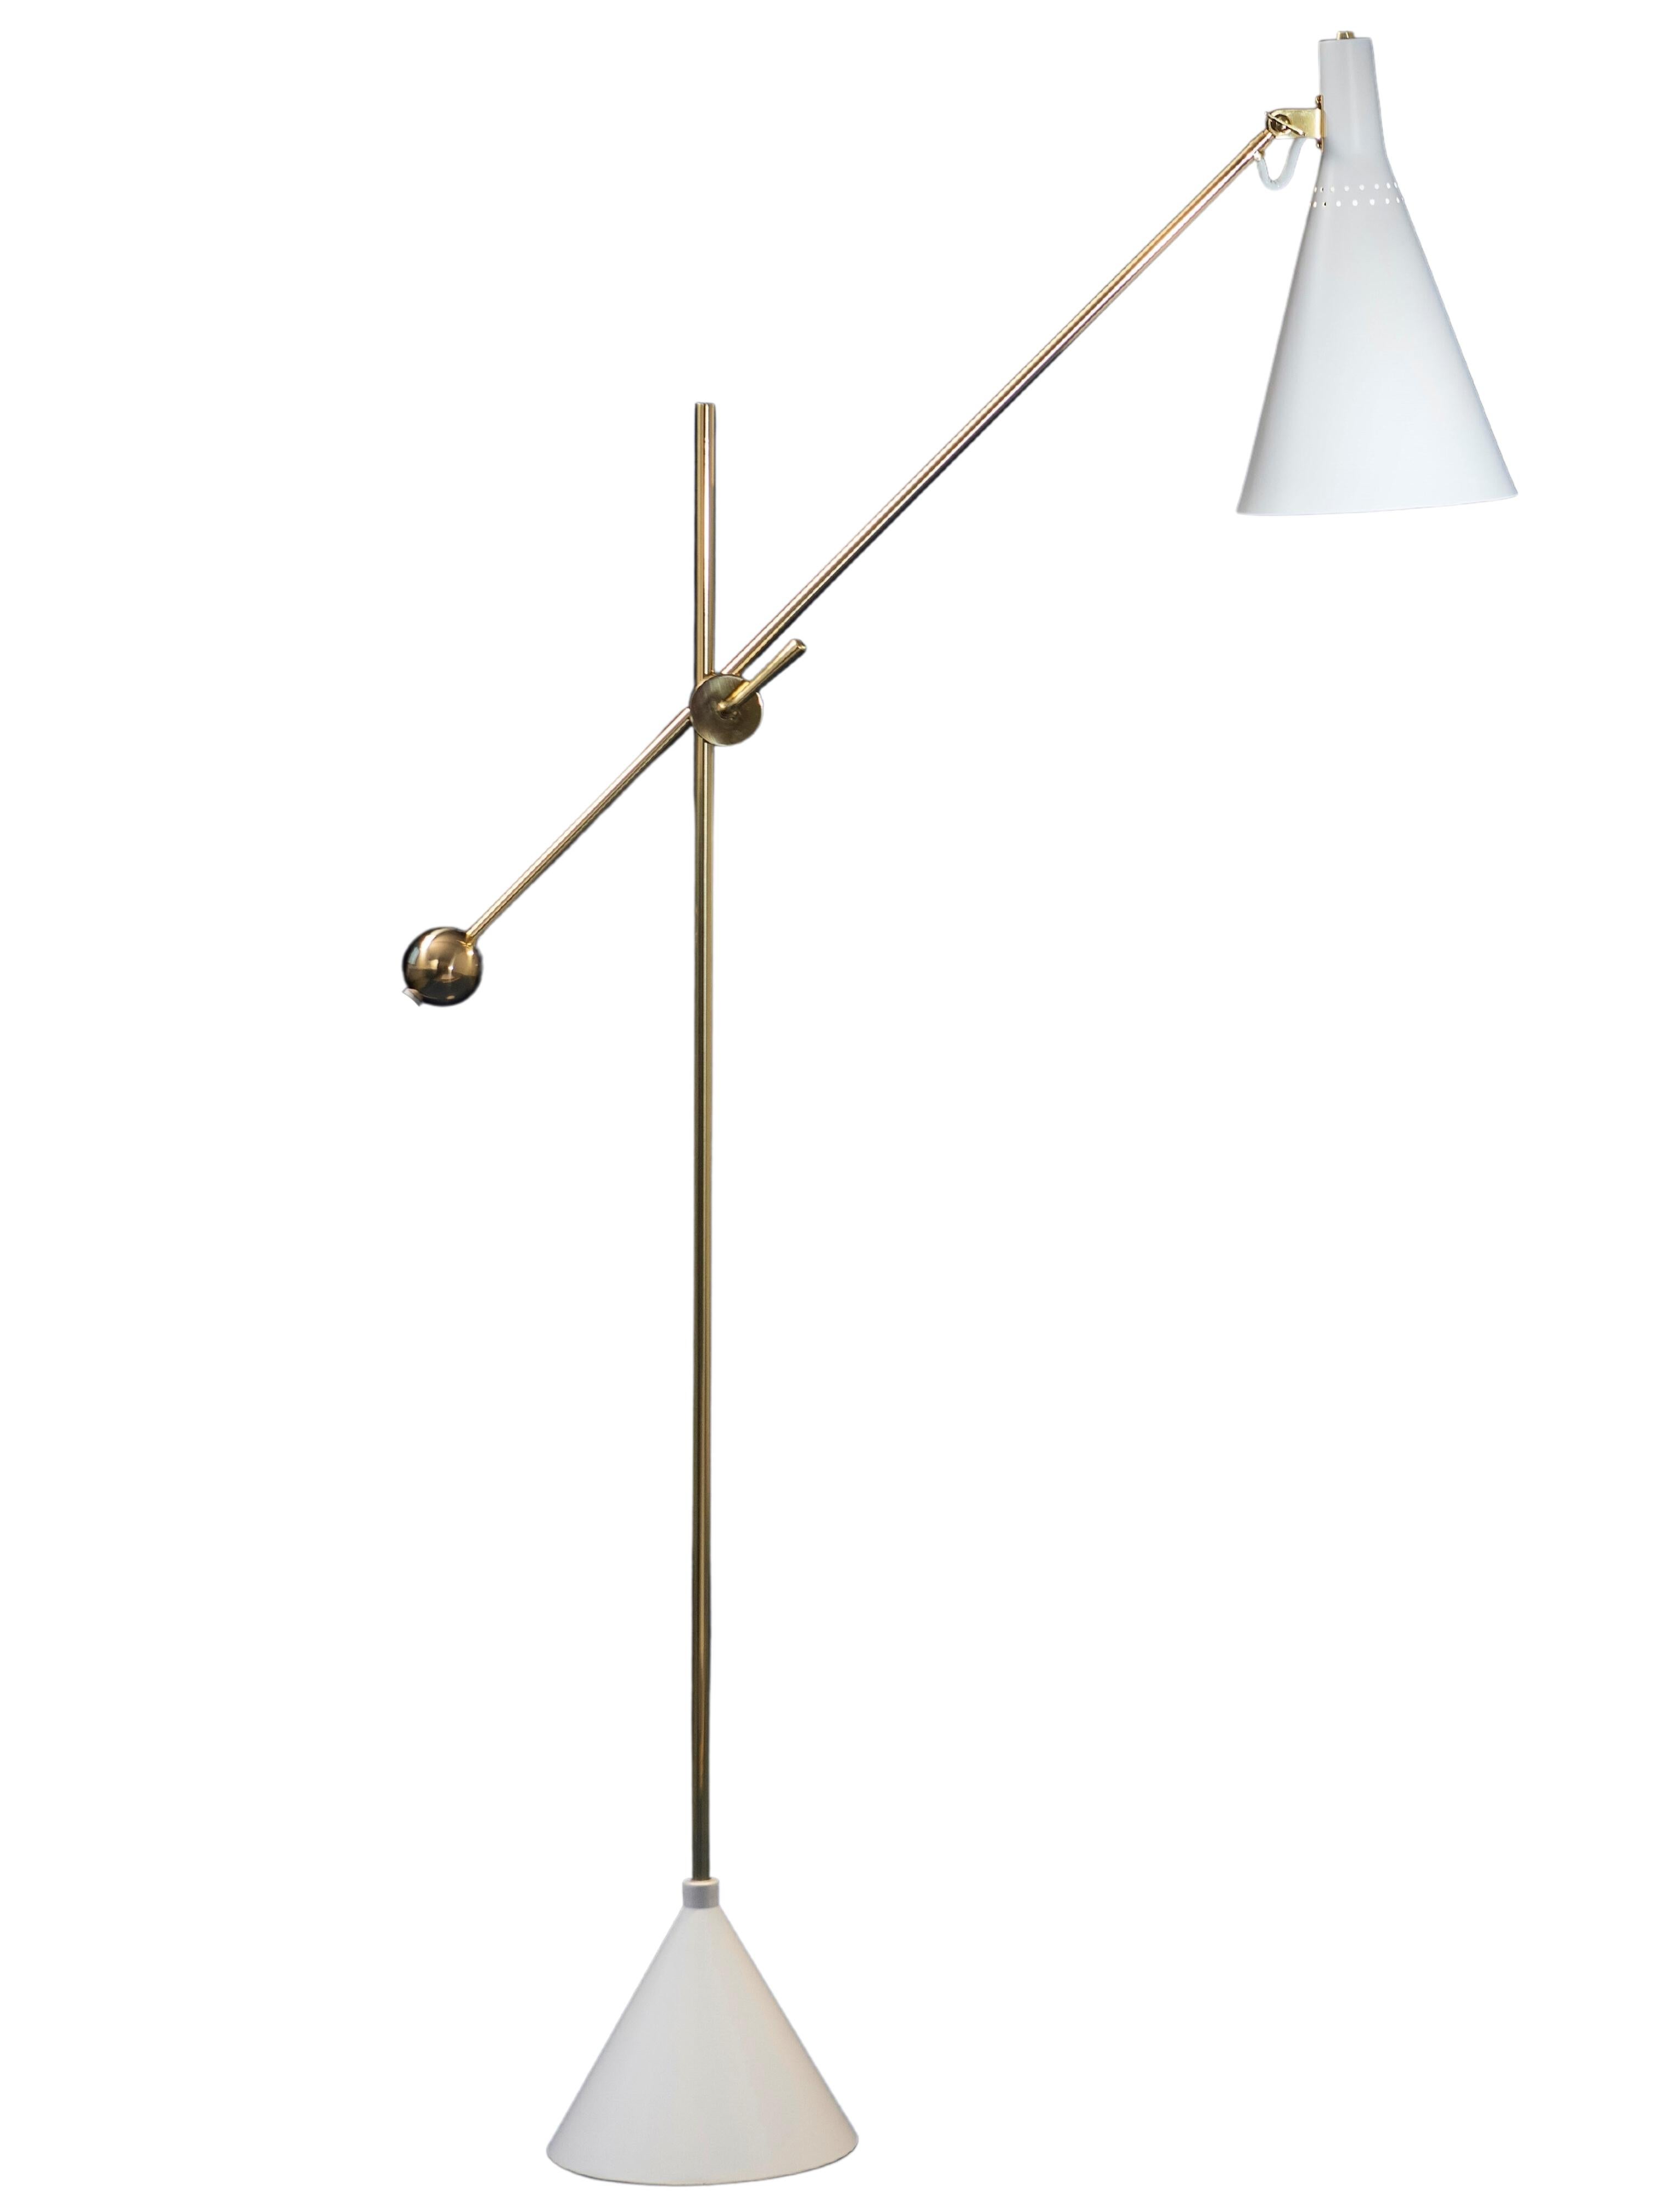 Tapio Wirkkala 'Crane' Articulating Floor Lamp in Black for Innolux Oy For Sale 13